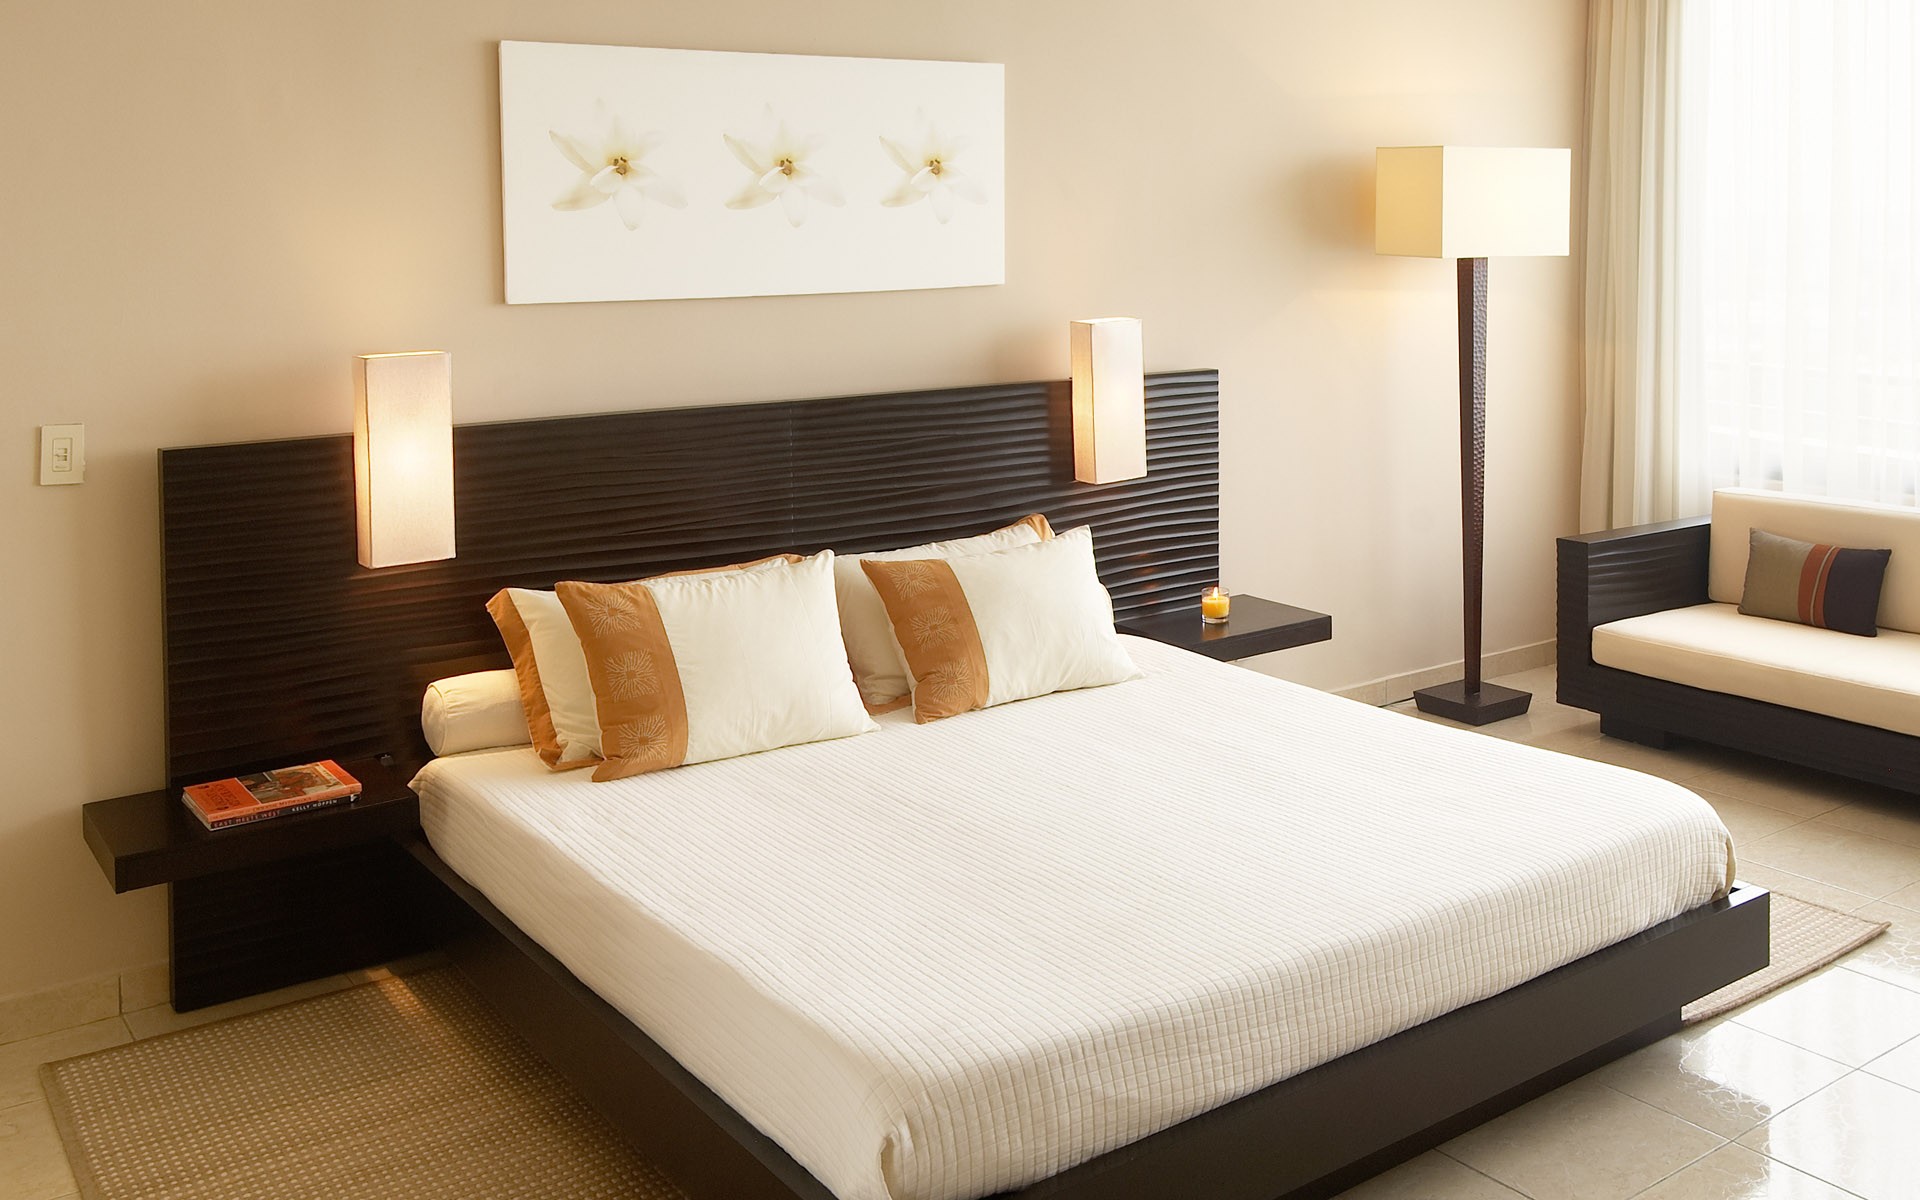 bedroom furniture for beige walls